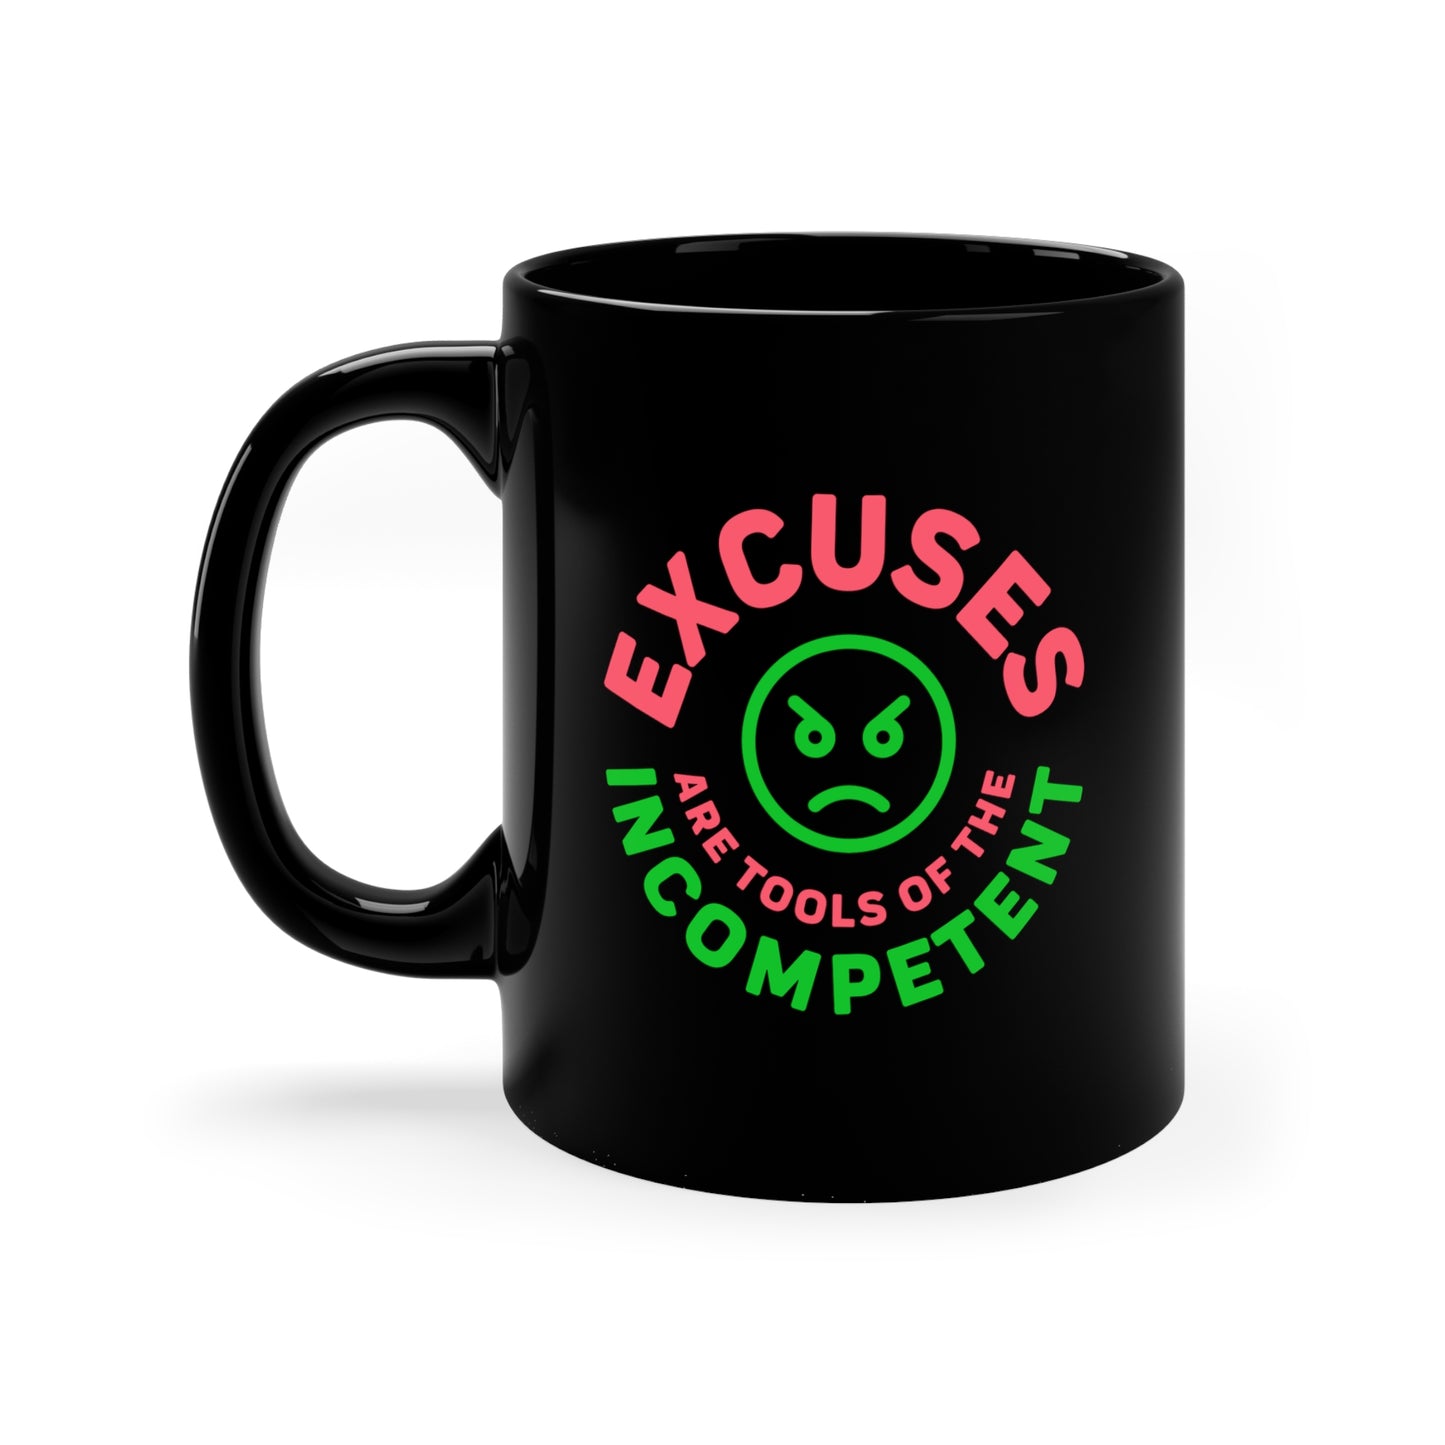 Excuses Mug - Pink + Green on Black